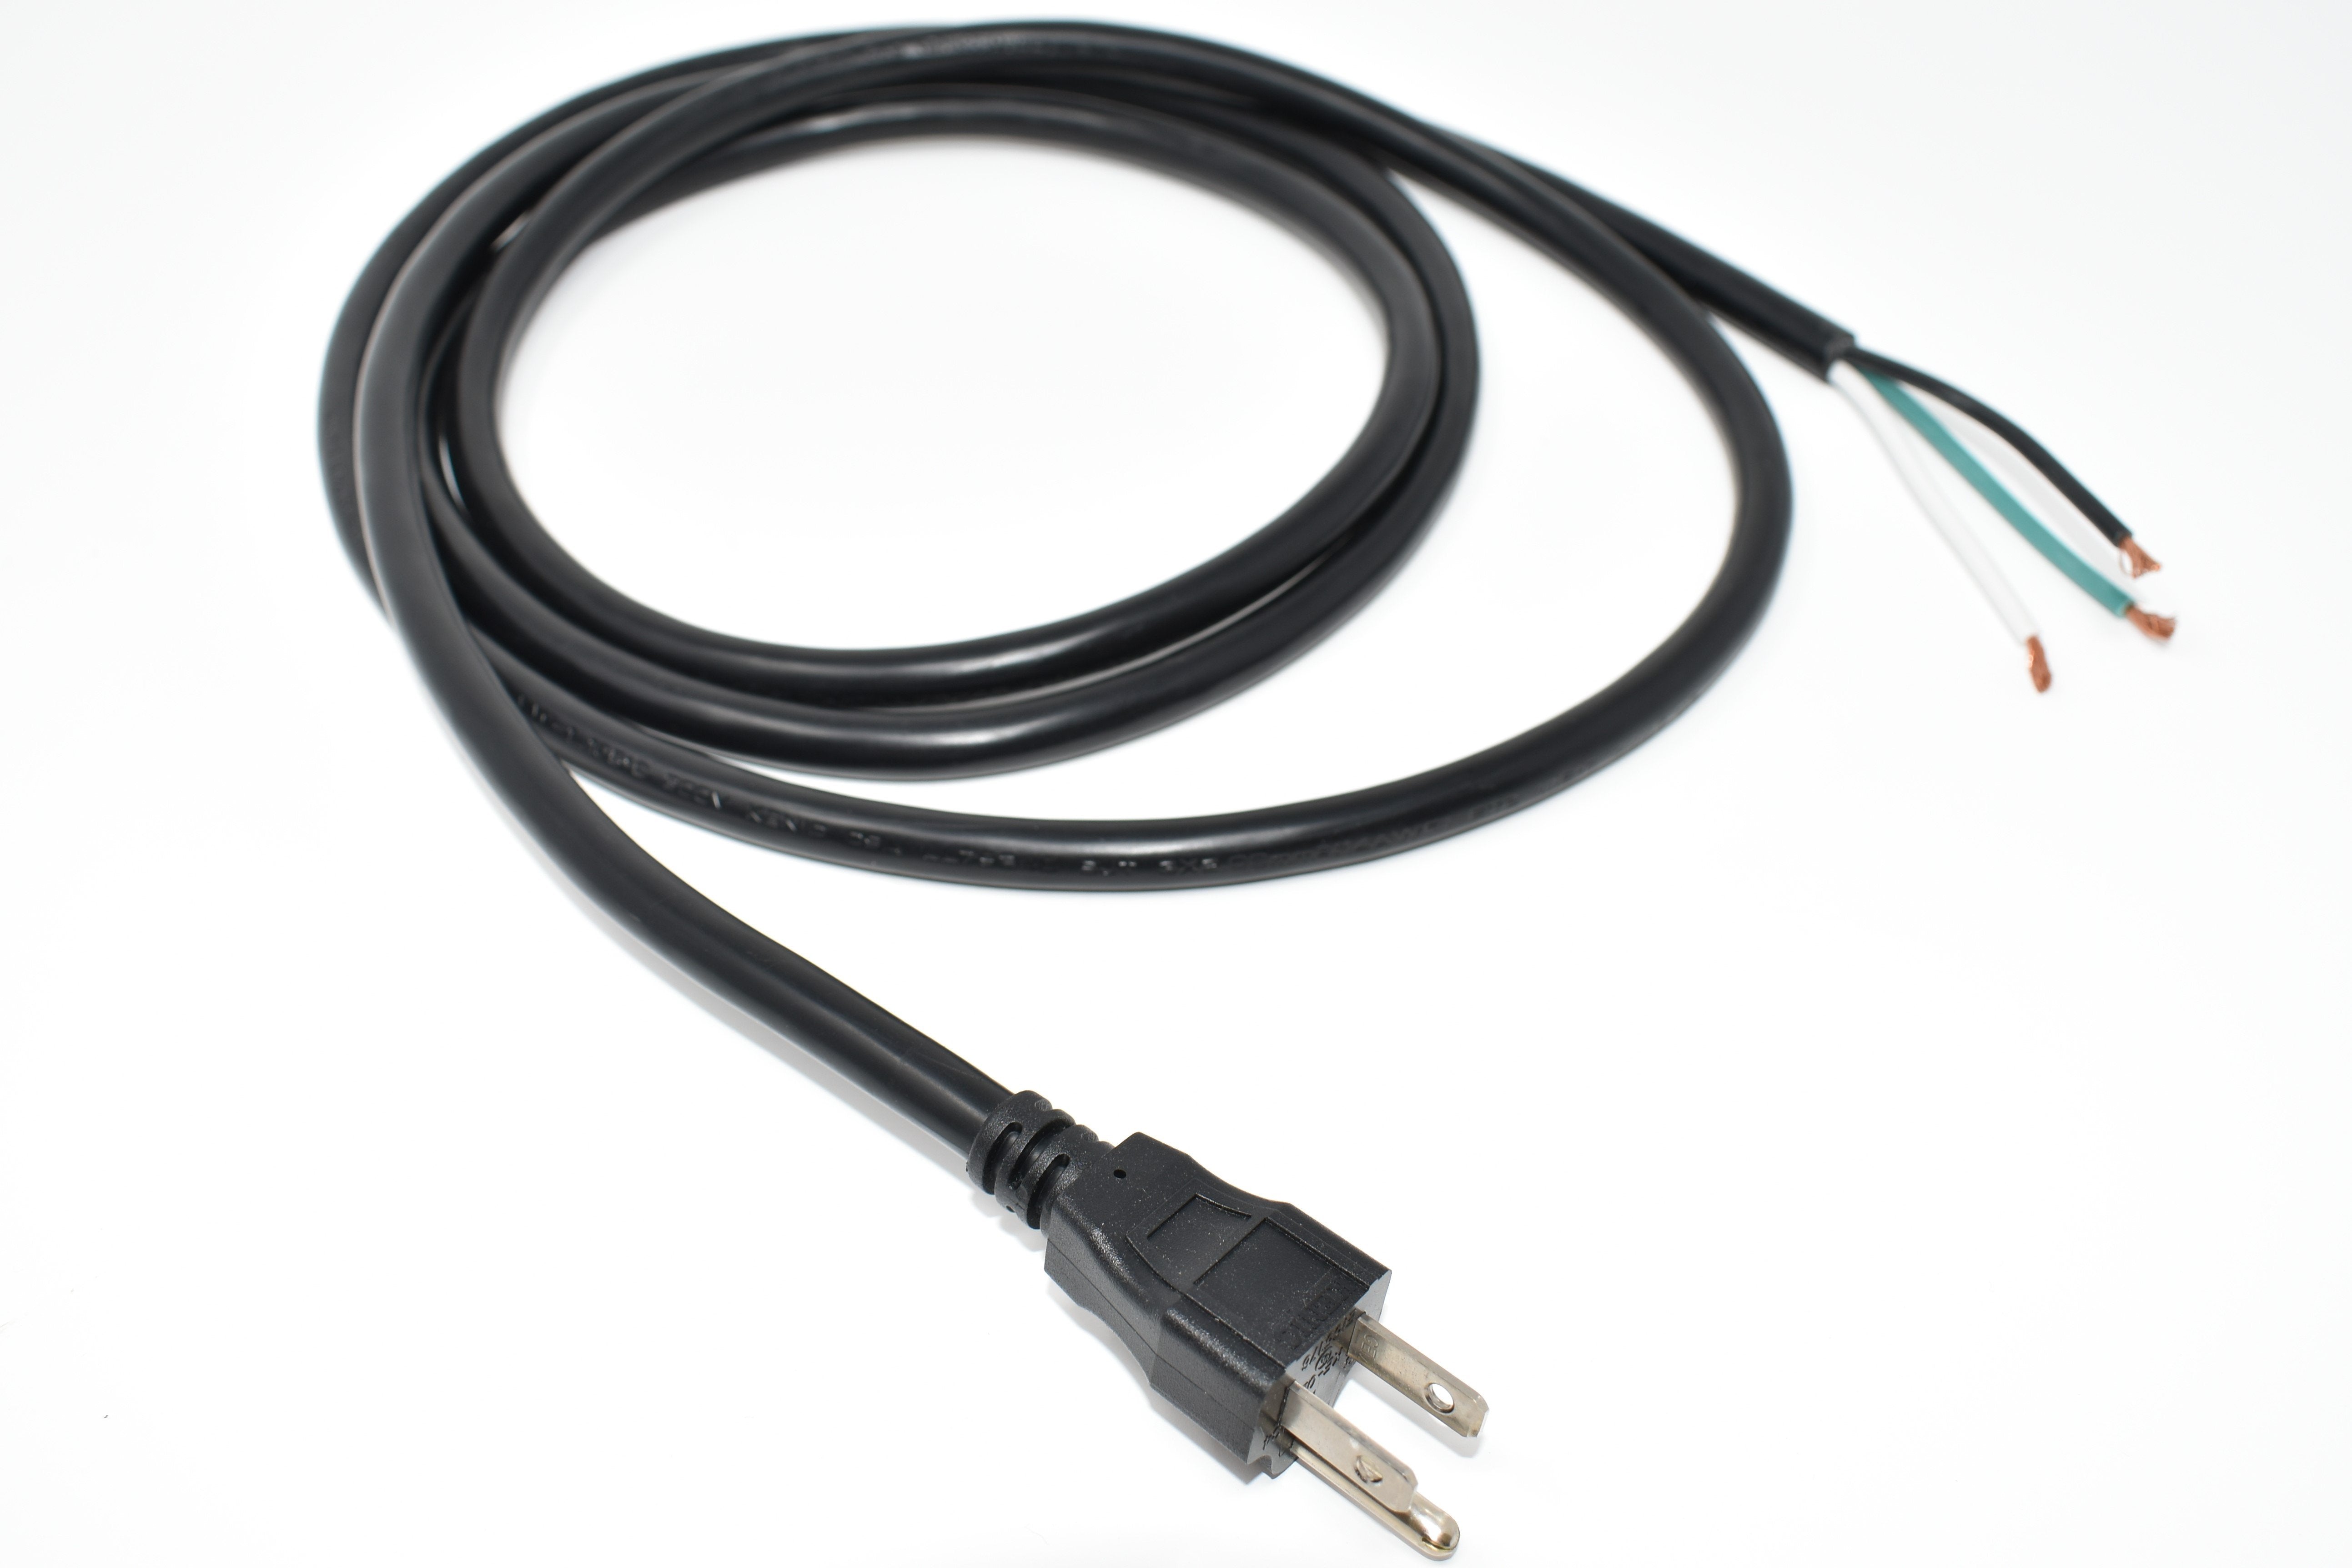 KeGu Power Cord with NEMA 5-15 Plug